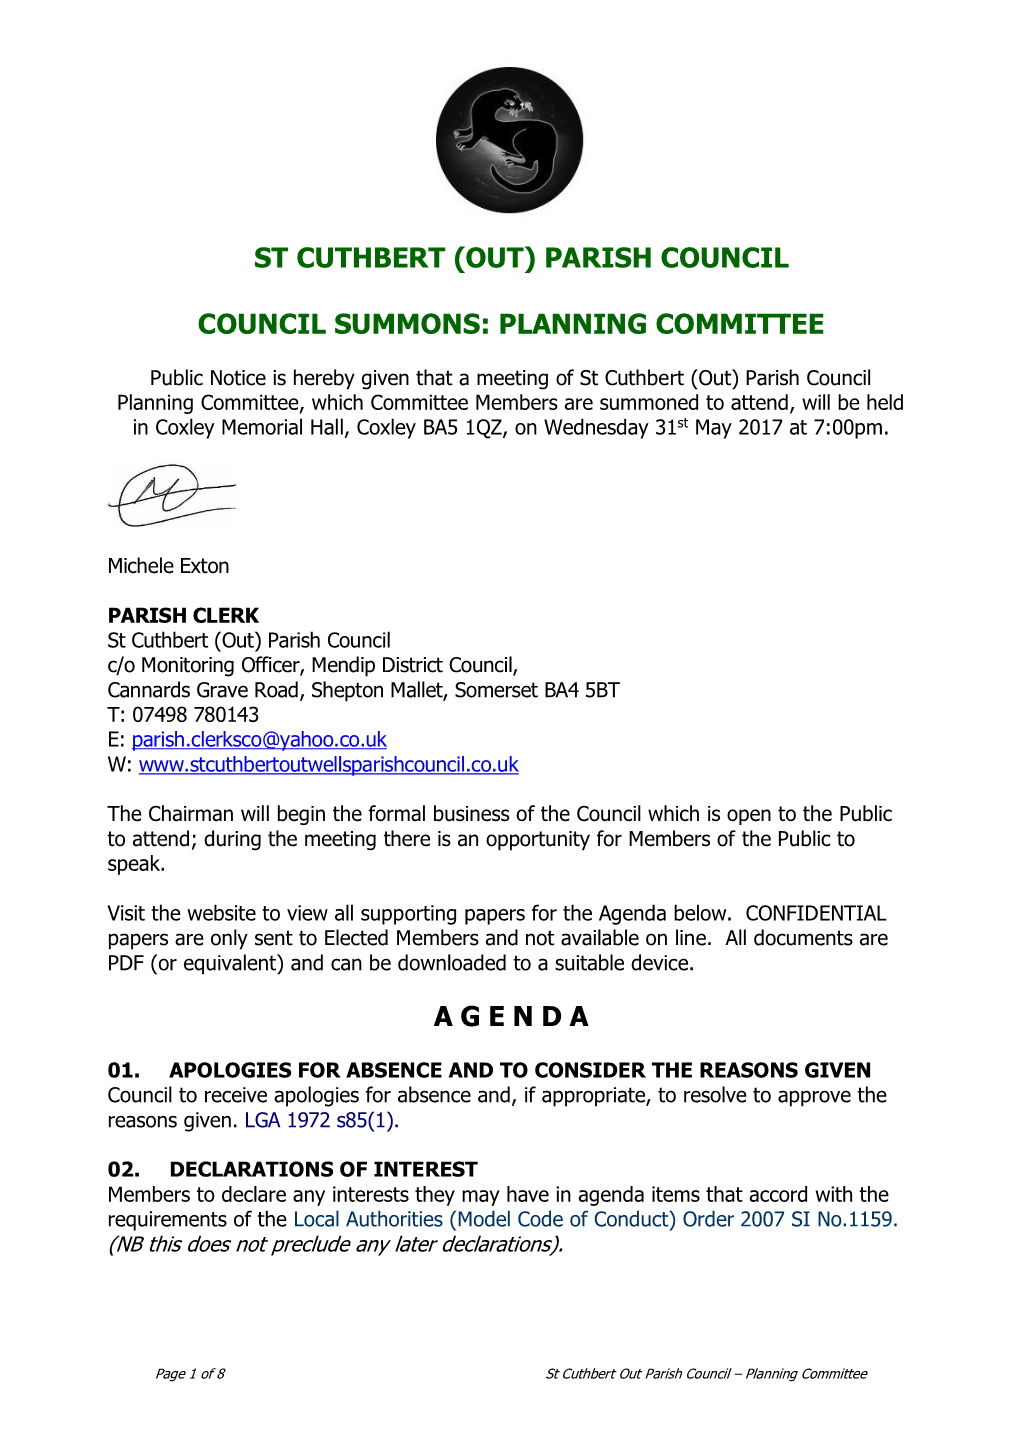 St Cuthbert (Out) Parish Council Council Summons